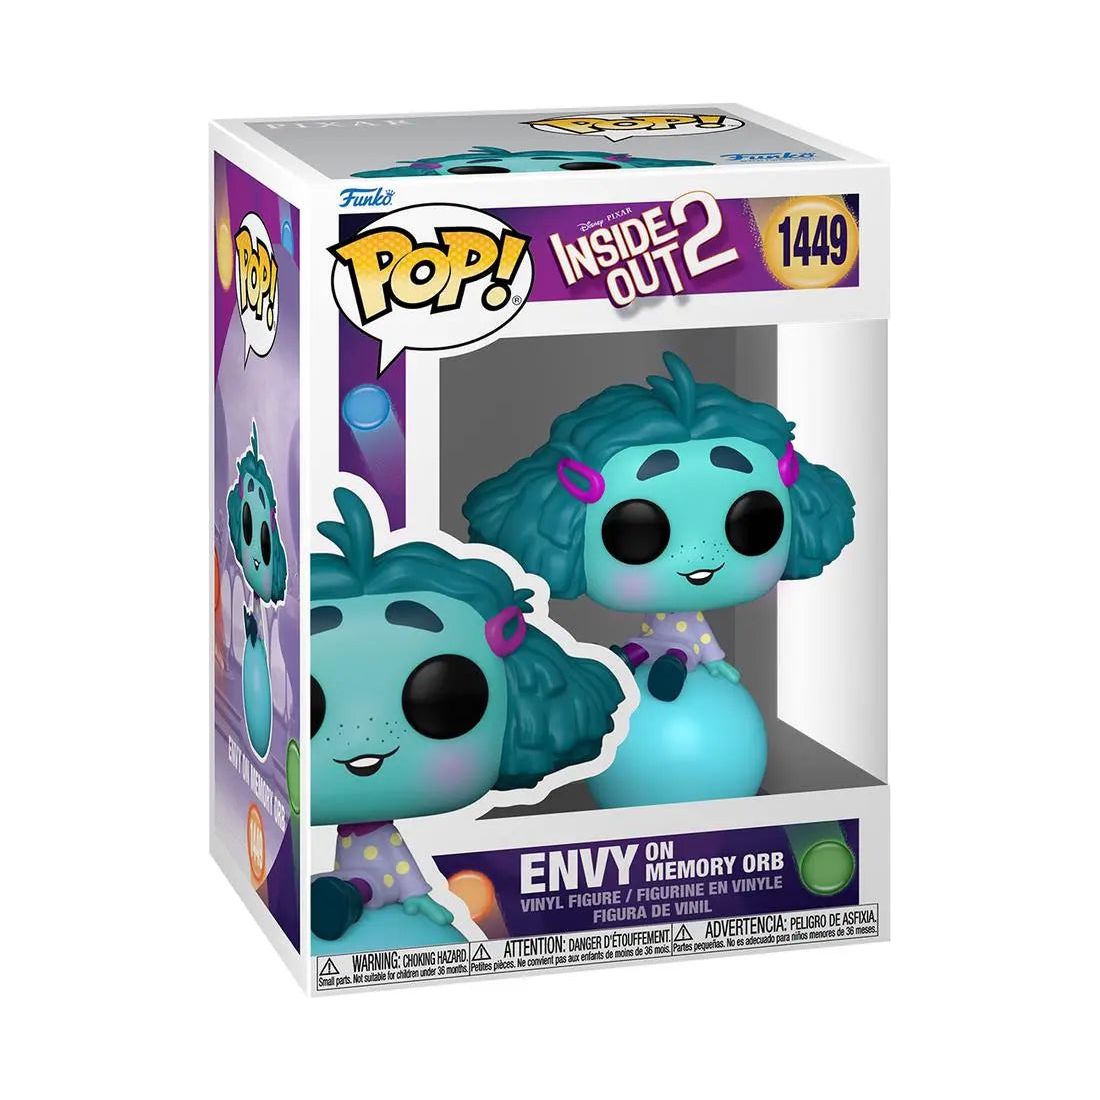 Funko Pop! Disney Pixar Inside Out 2 1449 Envy on Memory Orb Funko